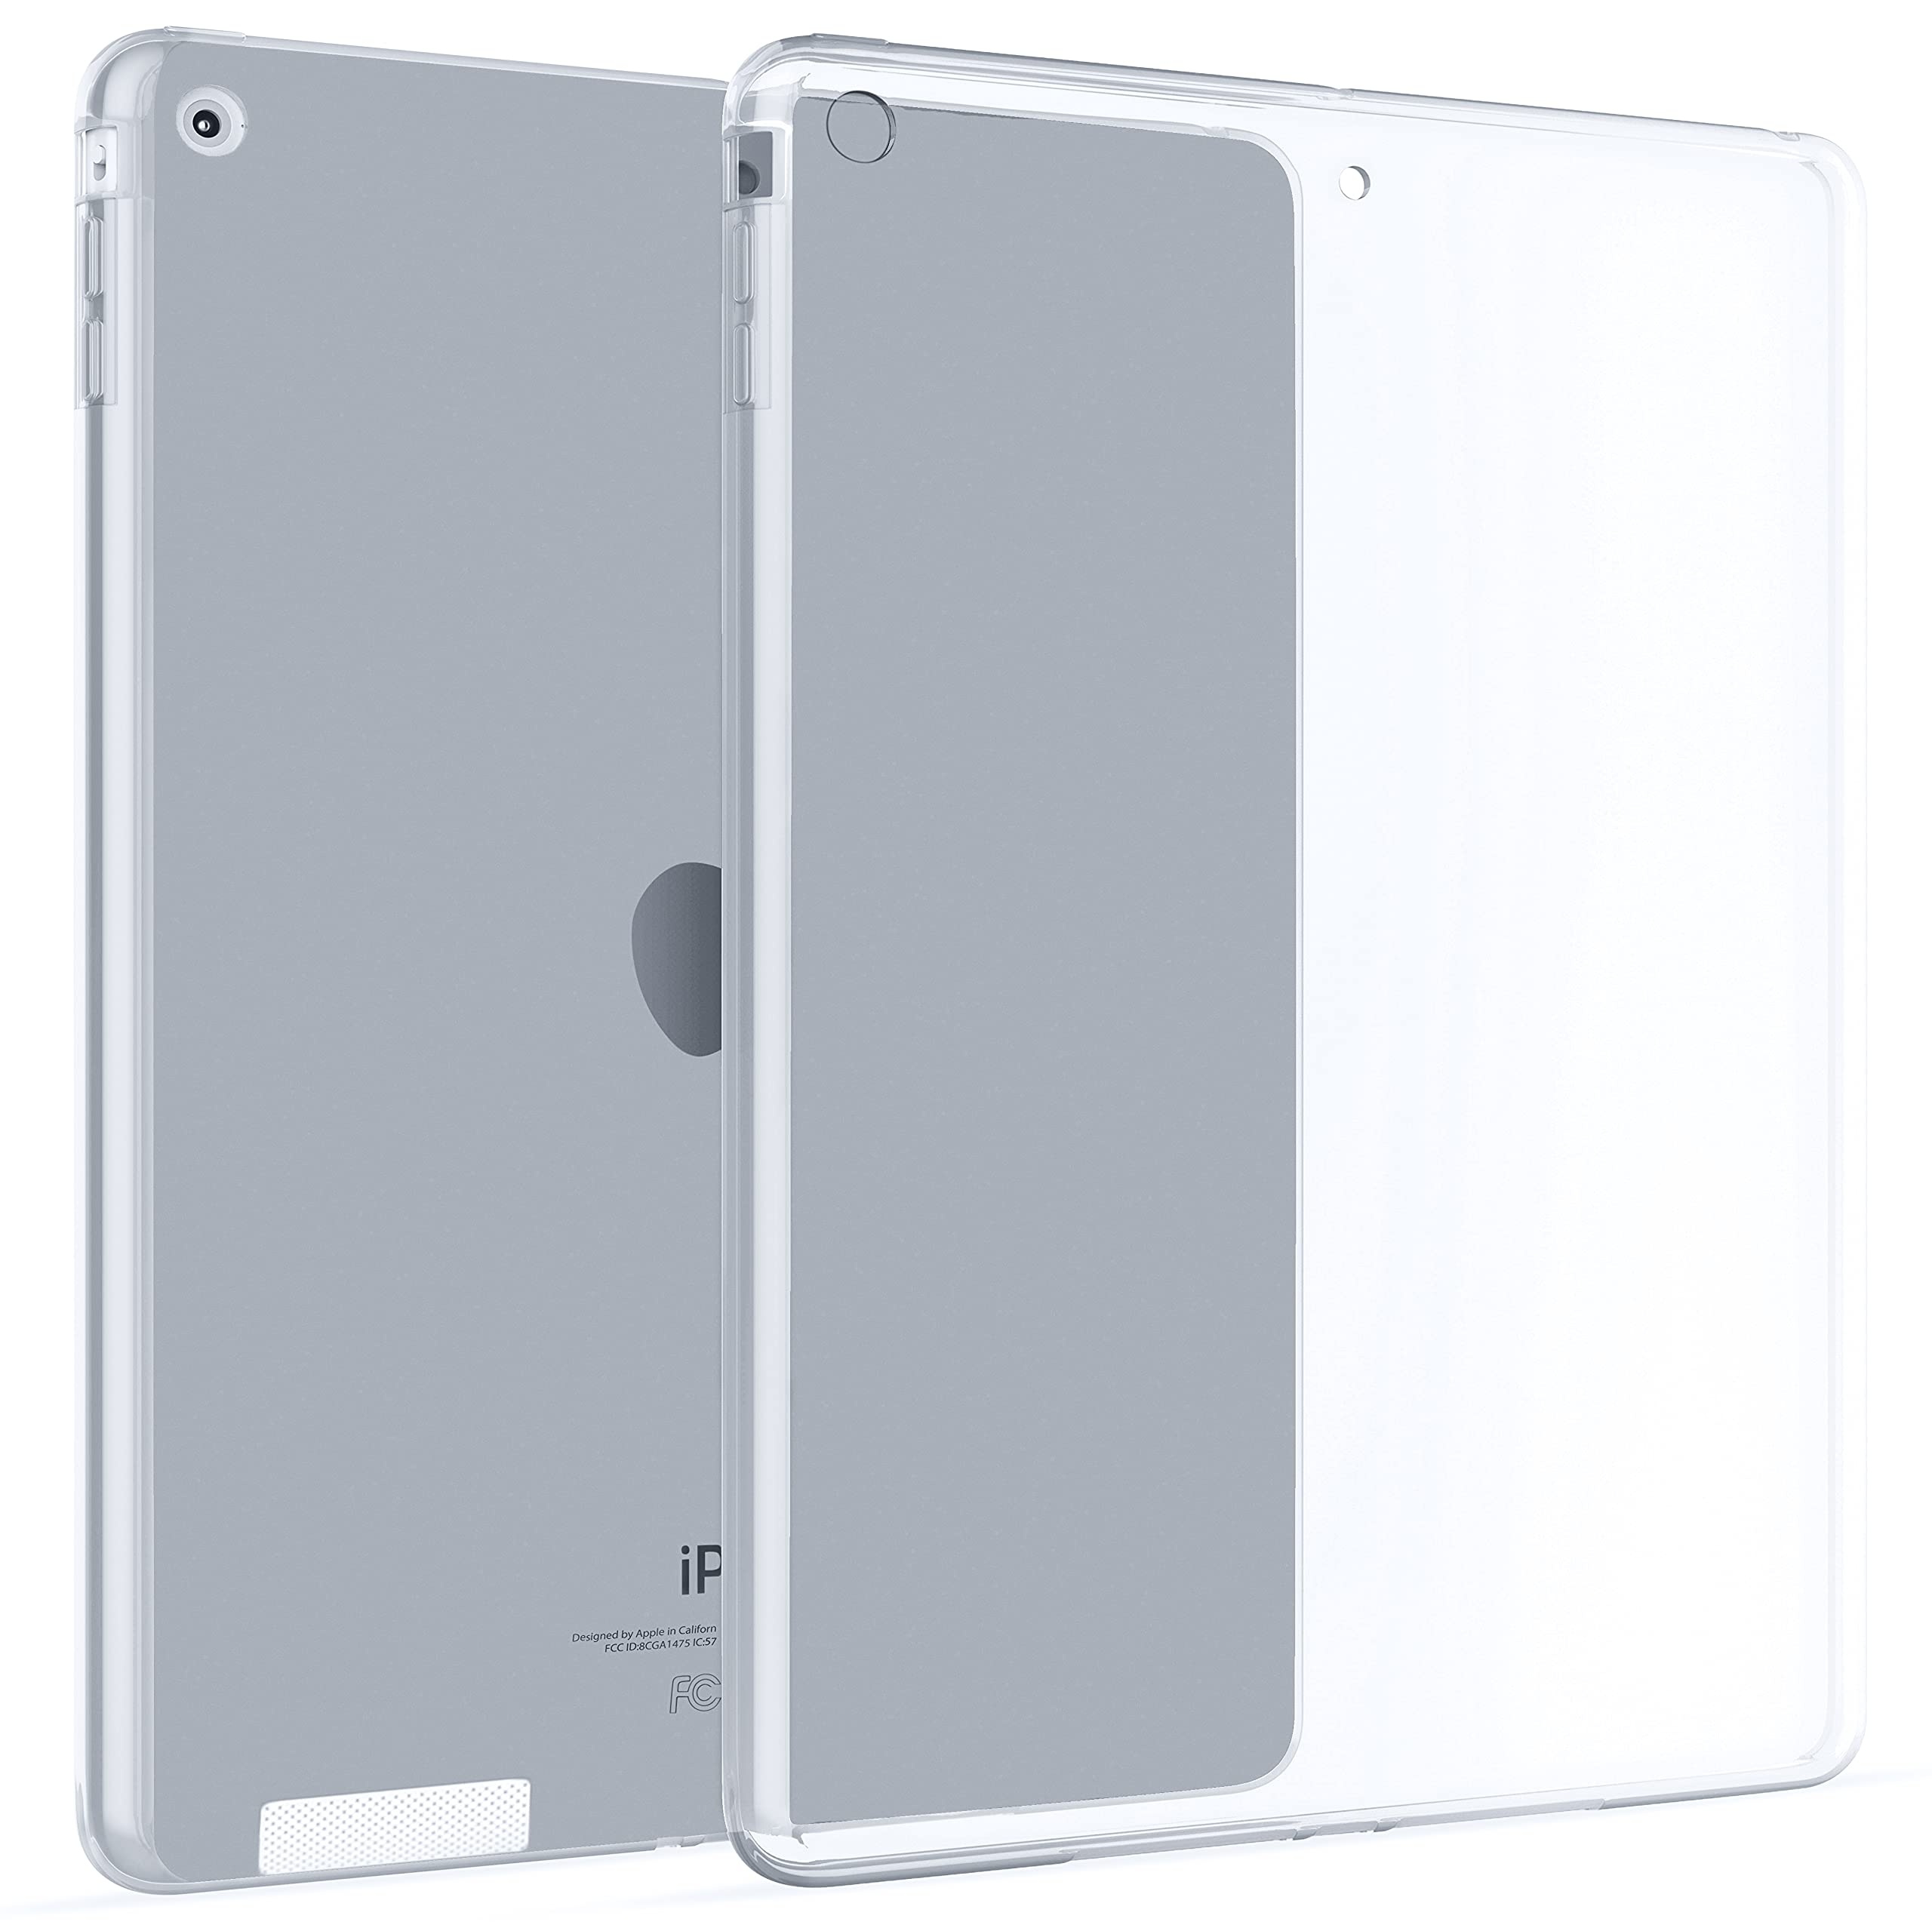 Okuli Hülle Kompatibel mit Apple iPad 2, iPad 3, iPad 4 - Transparent Silikon Cover Case Schutzhülle in Klar